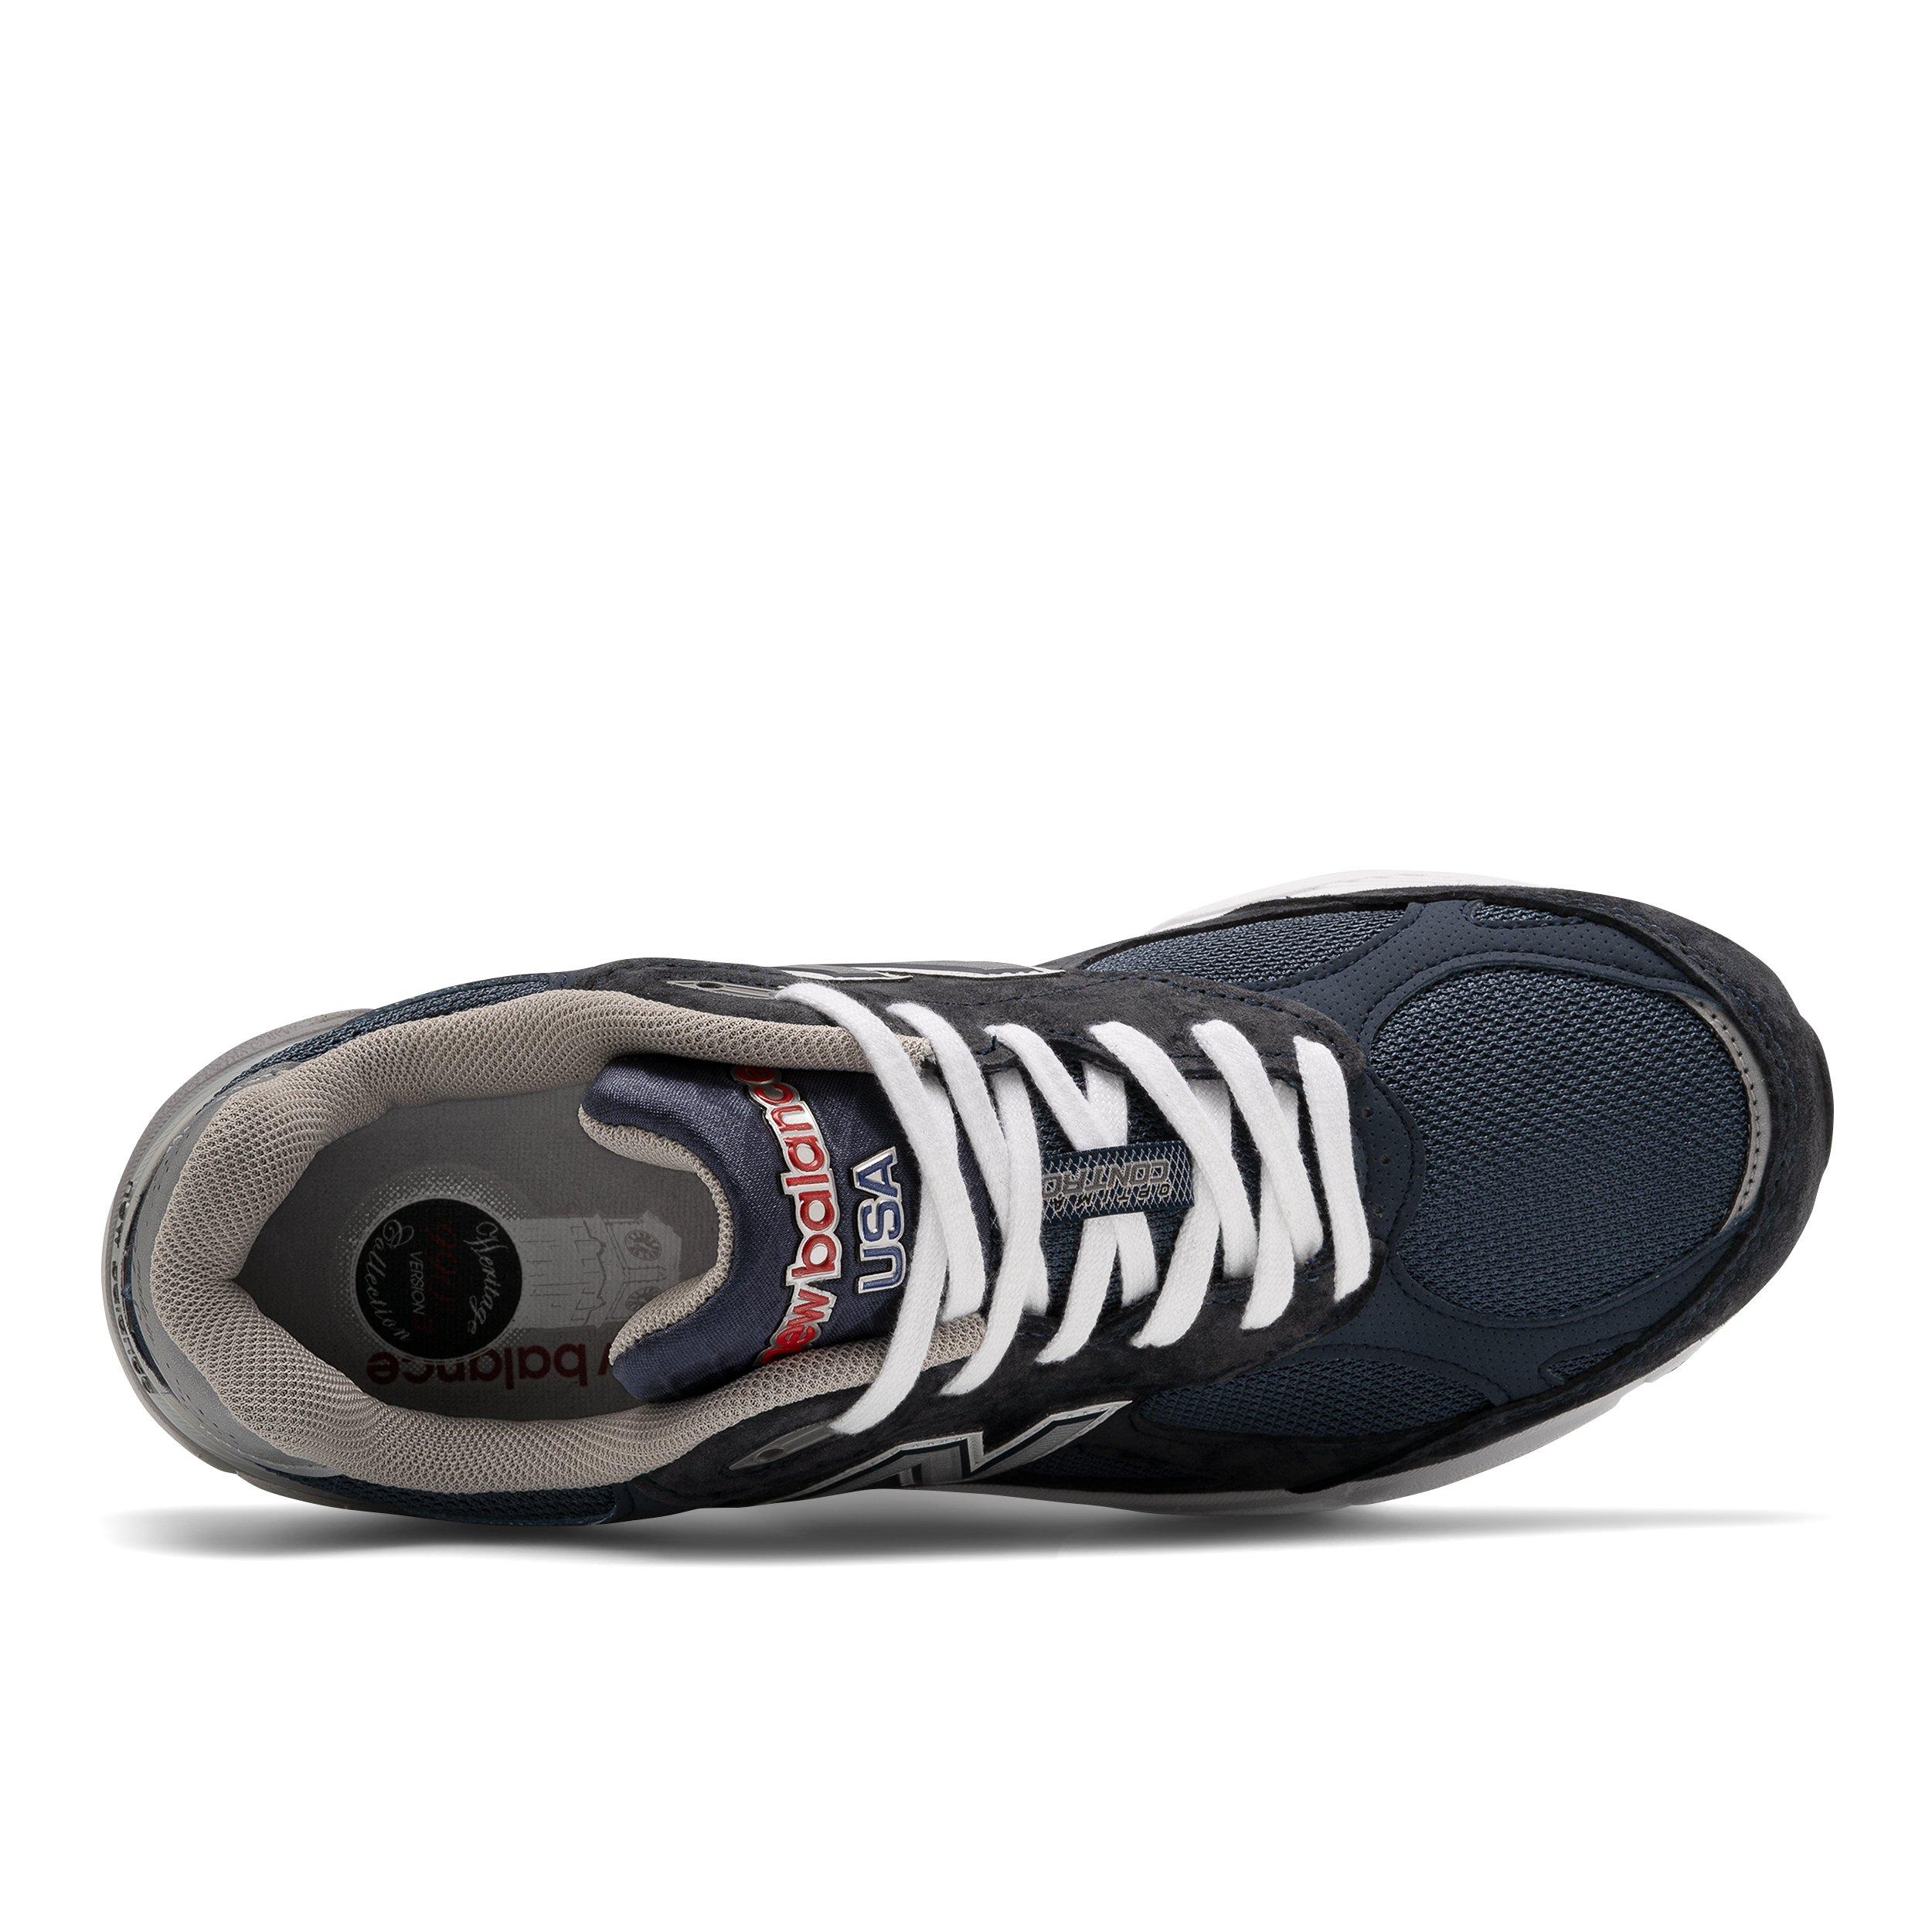 New Balance 990 "Navy/Grey" Shoe